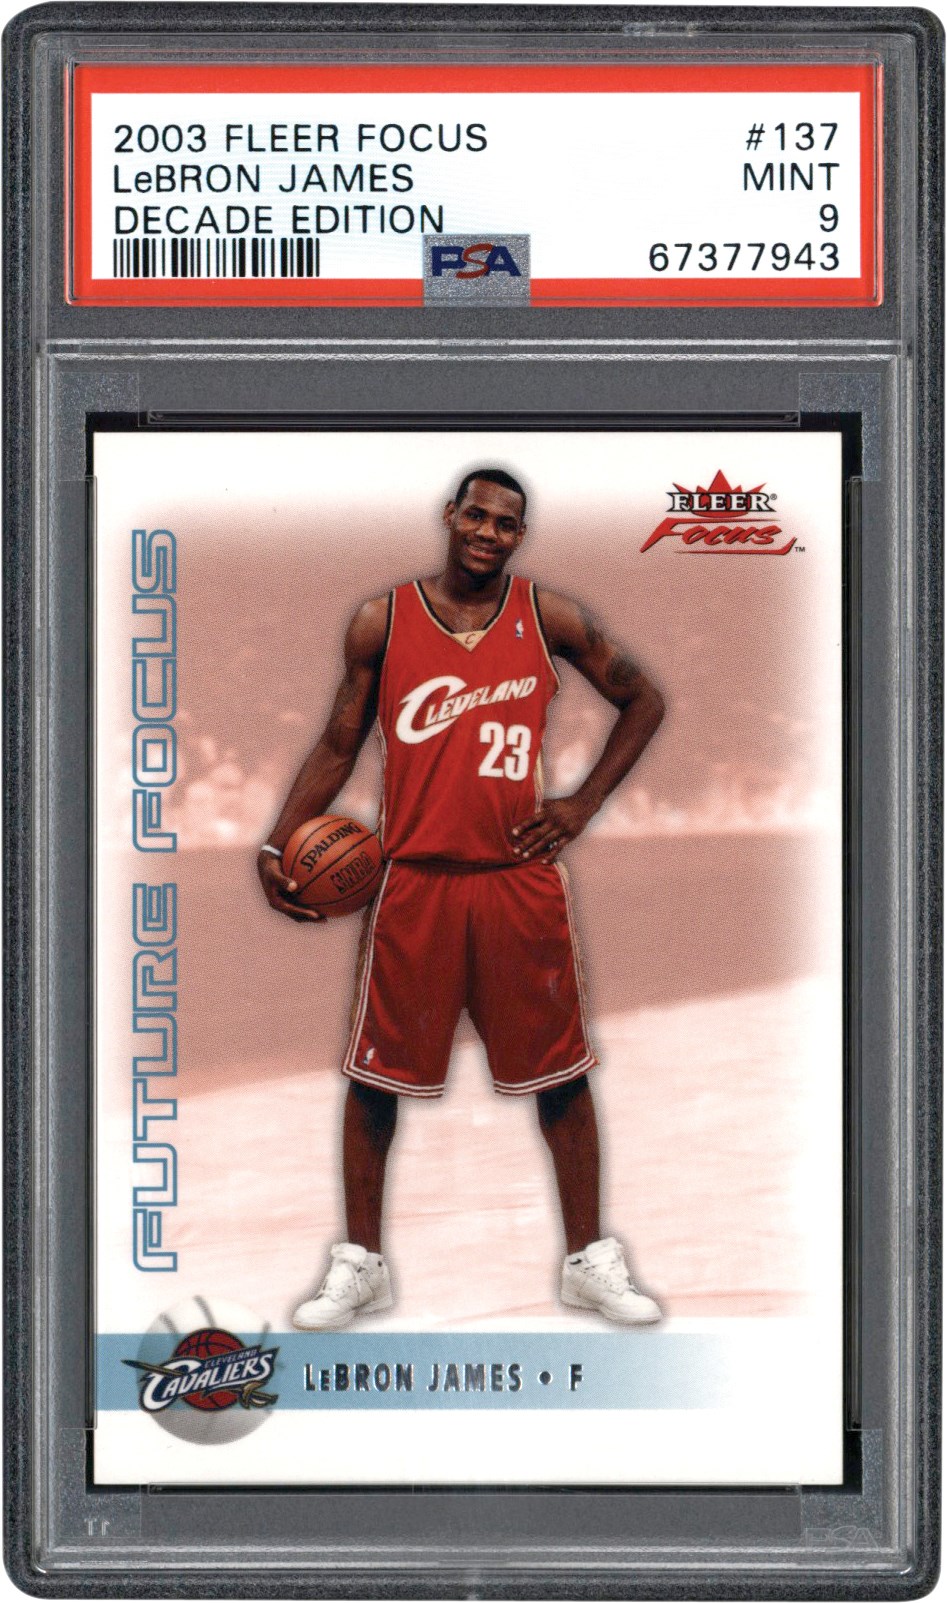 - Rare 2003 Fleer Focus Basketball Decade Edition #137 LeBron James Rookie Card #9/10 PSA MINT 9 (Pop 2 Highest Graded)